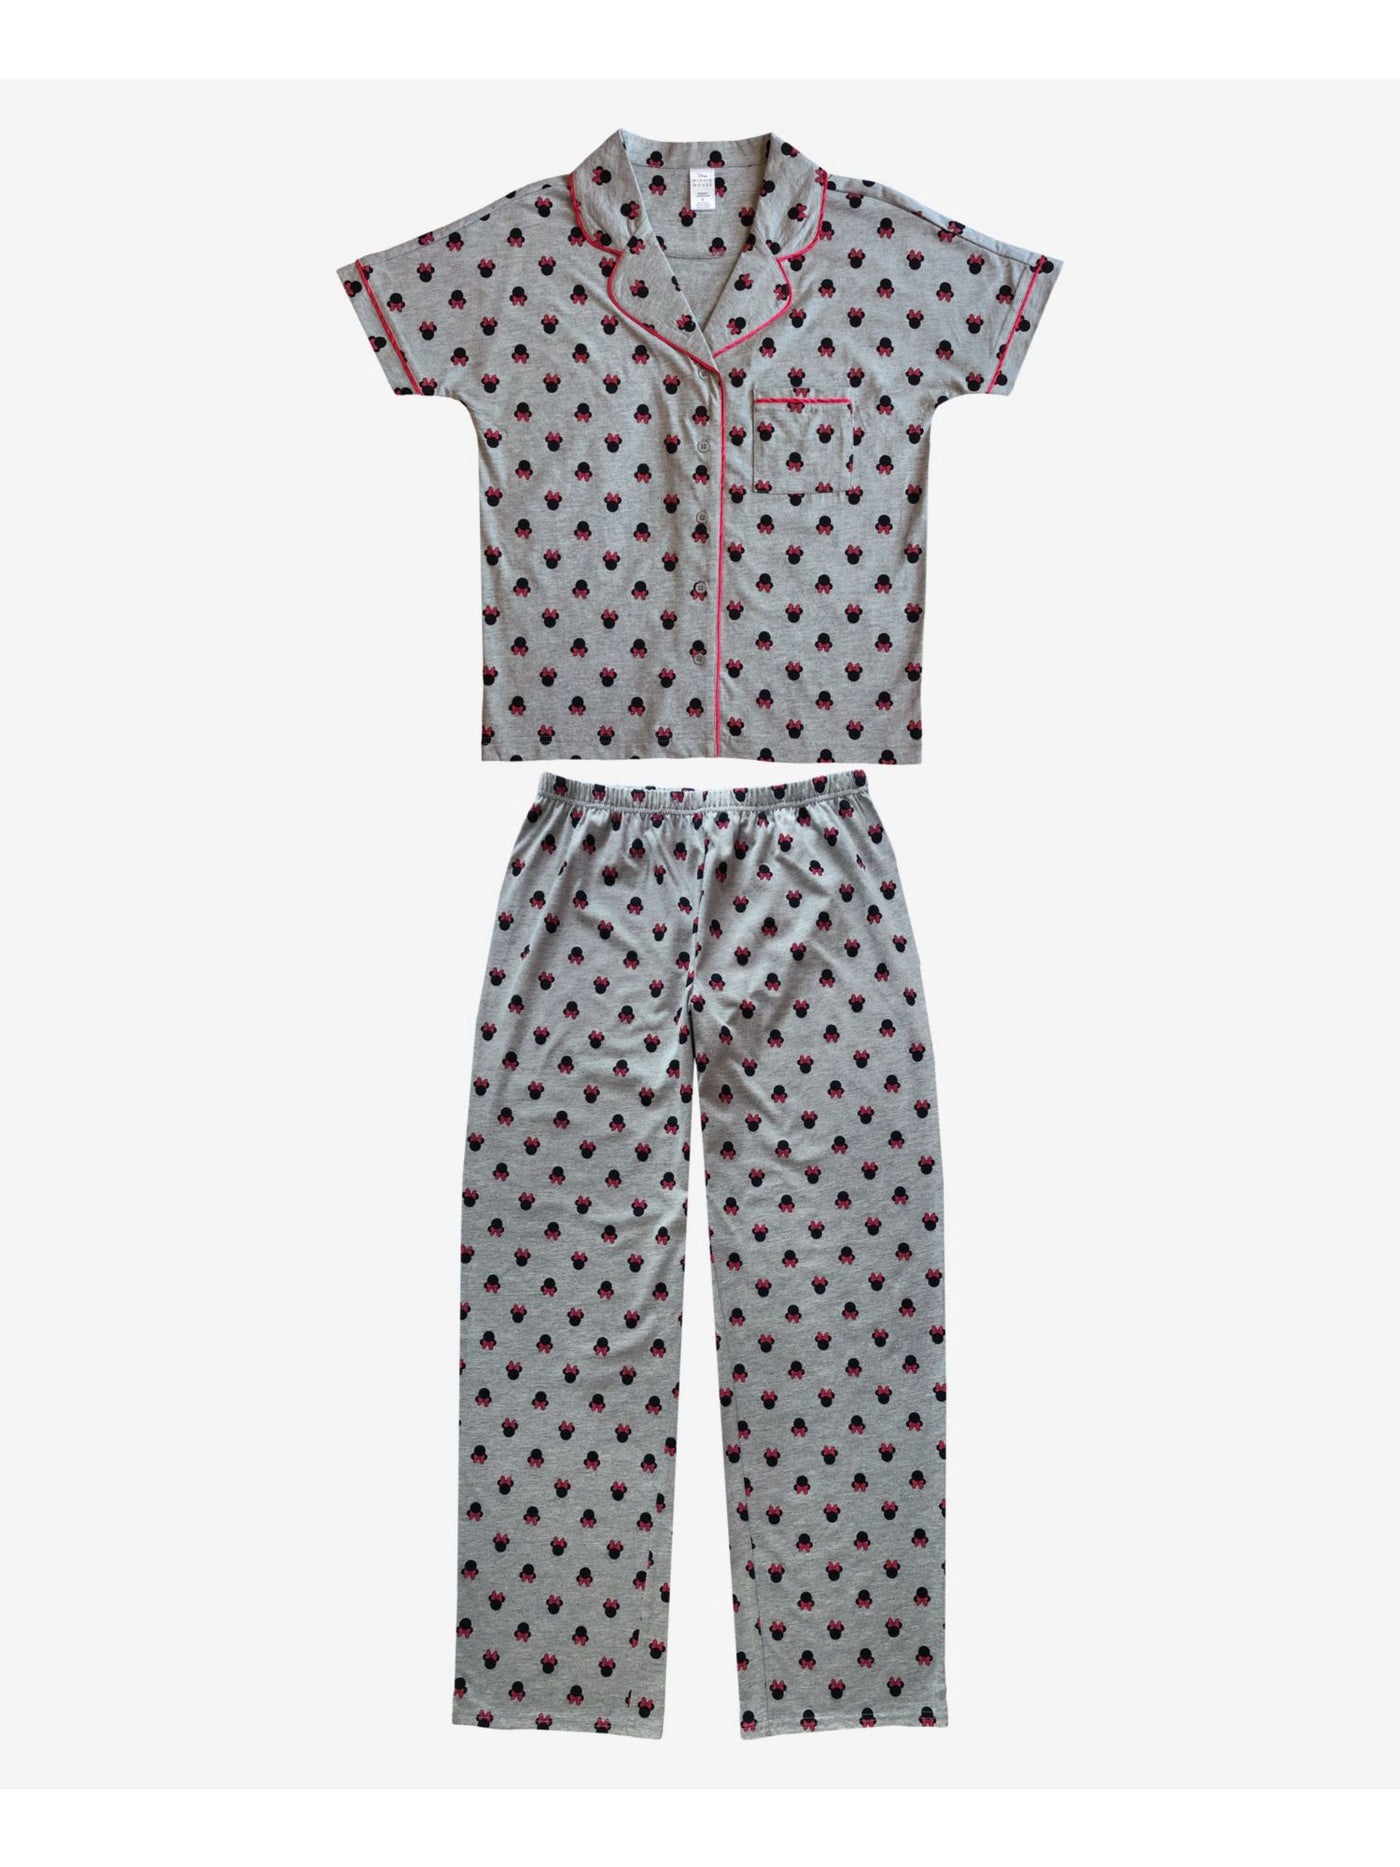 HYBRID APPAREL Intimates Gray Collared Pocketed Contrast Piping Trim Sleep Shirt Pajama Top S